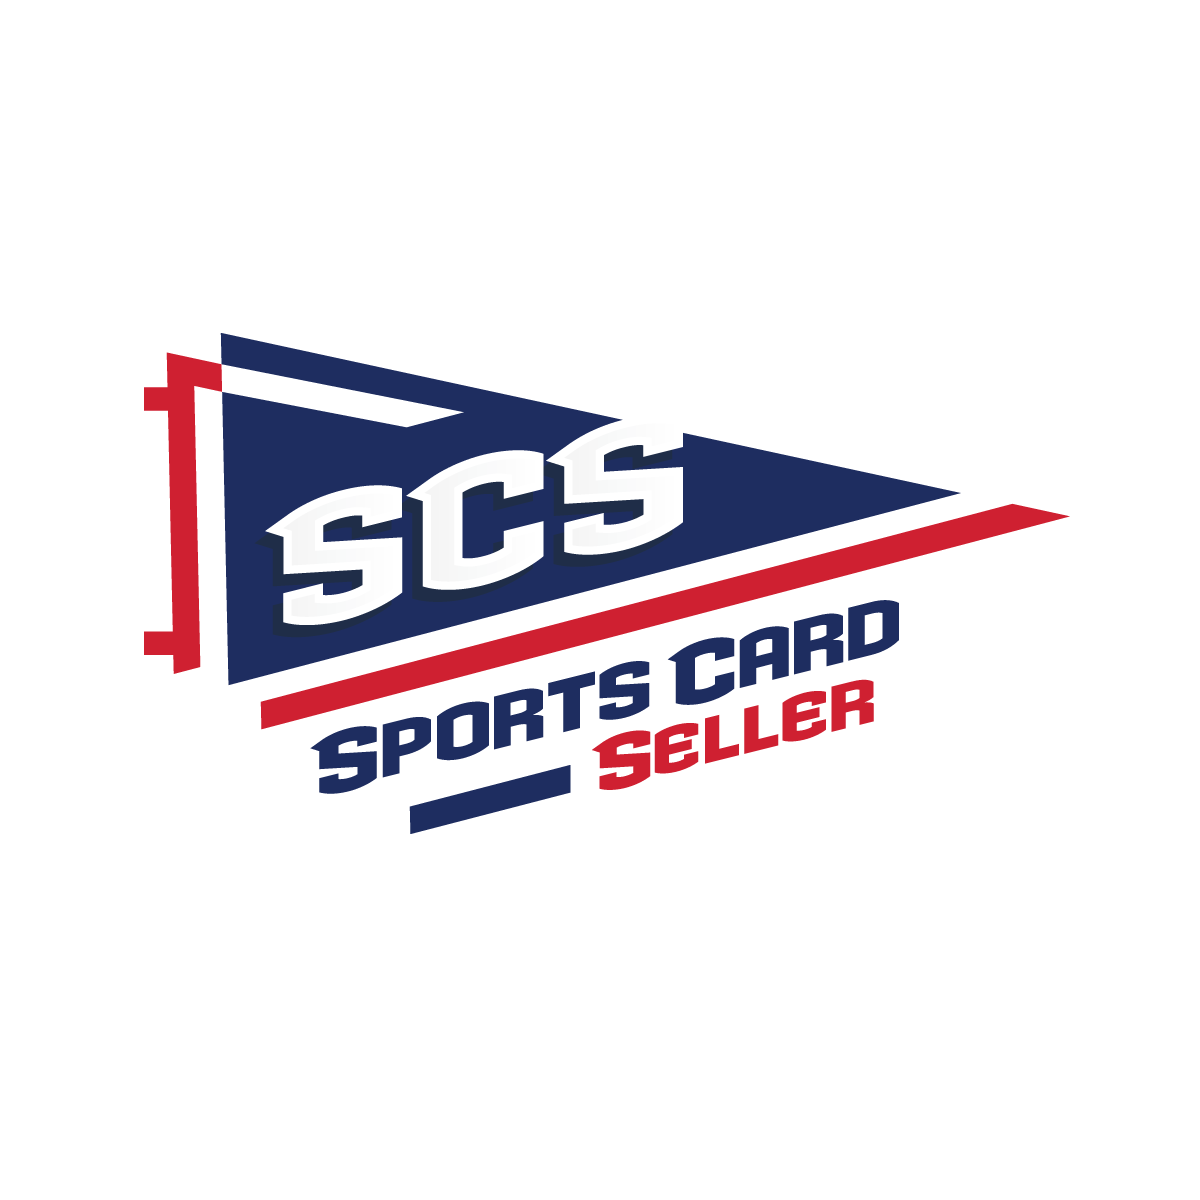 Sports Card Seller